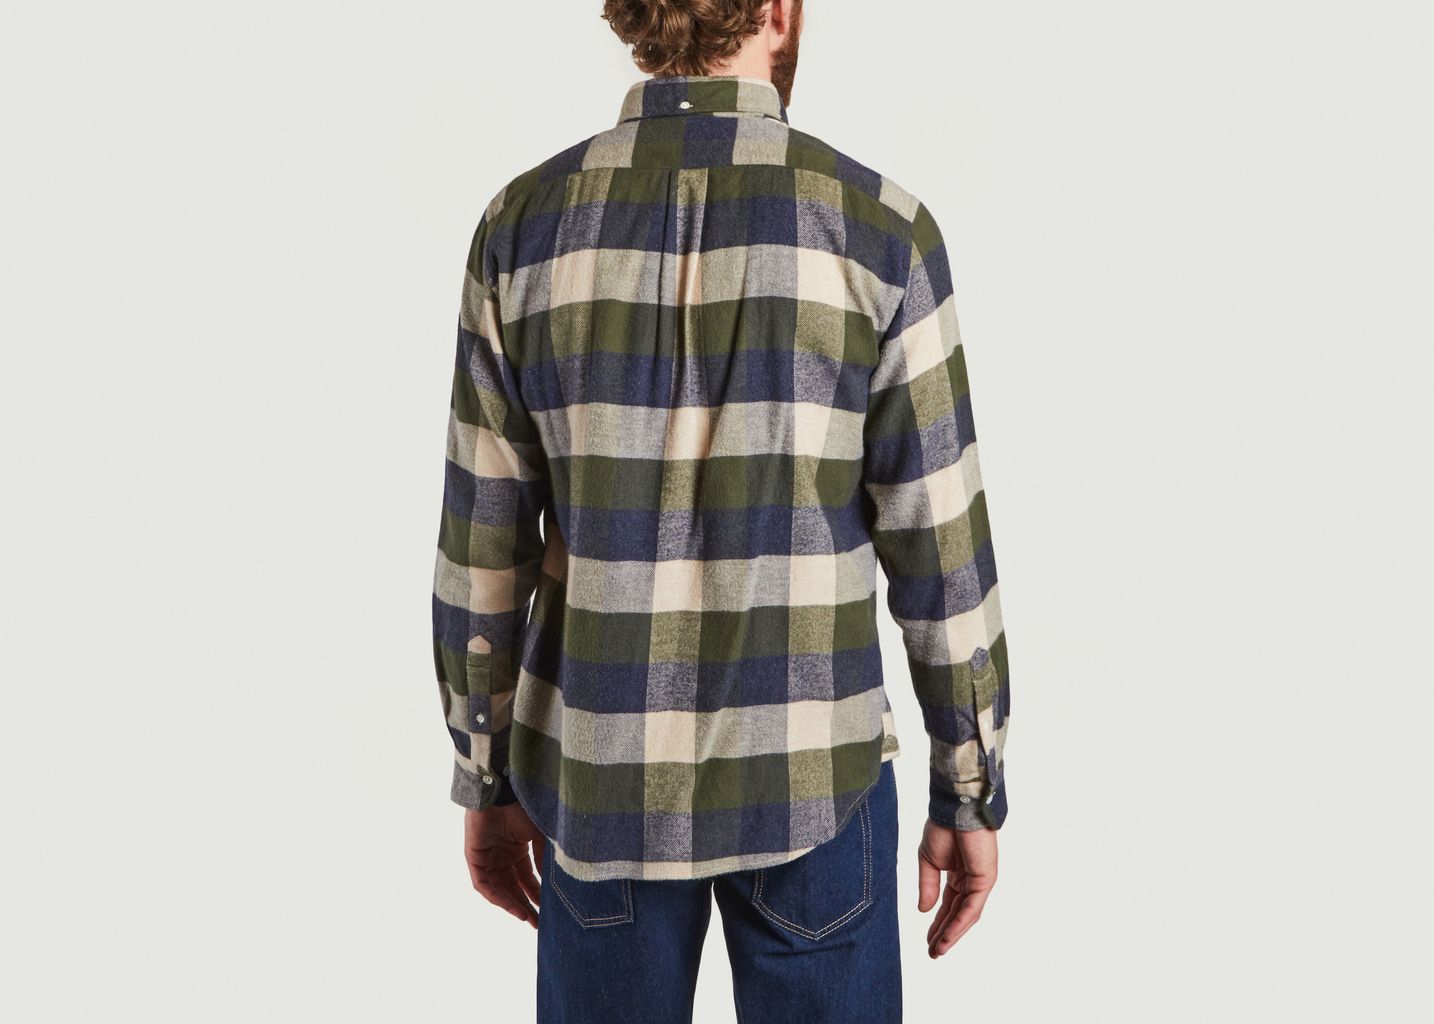 Pitt plaid flannel shirt - Hartford